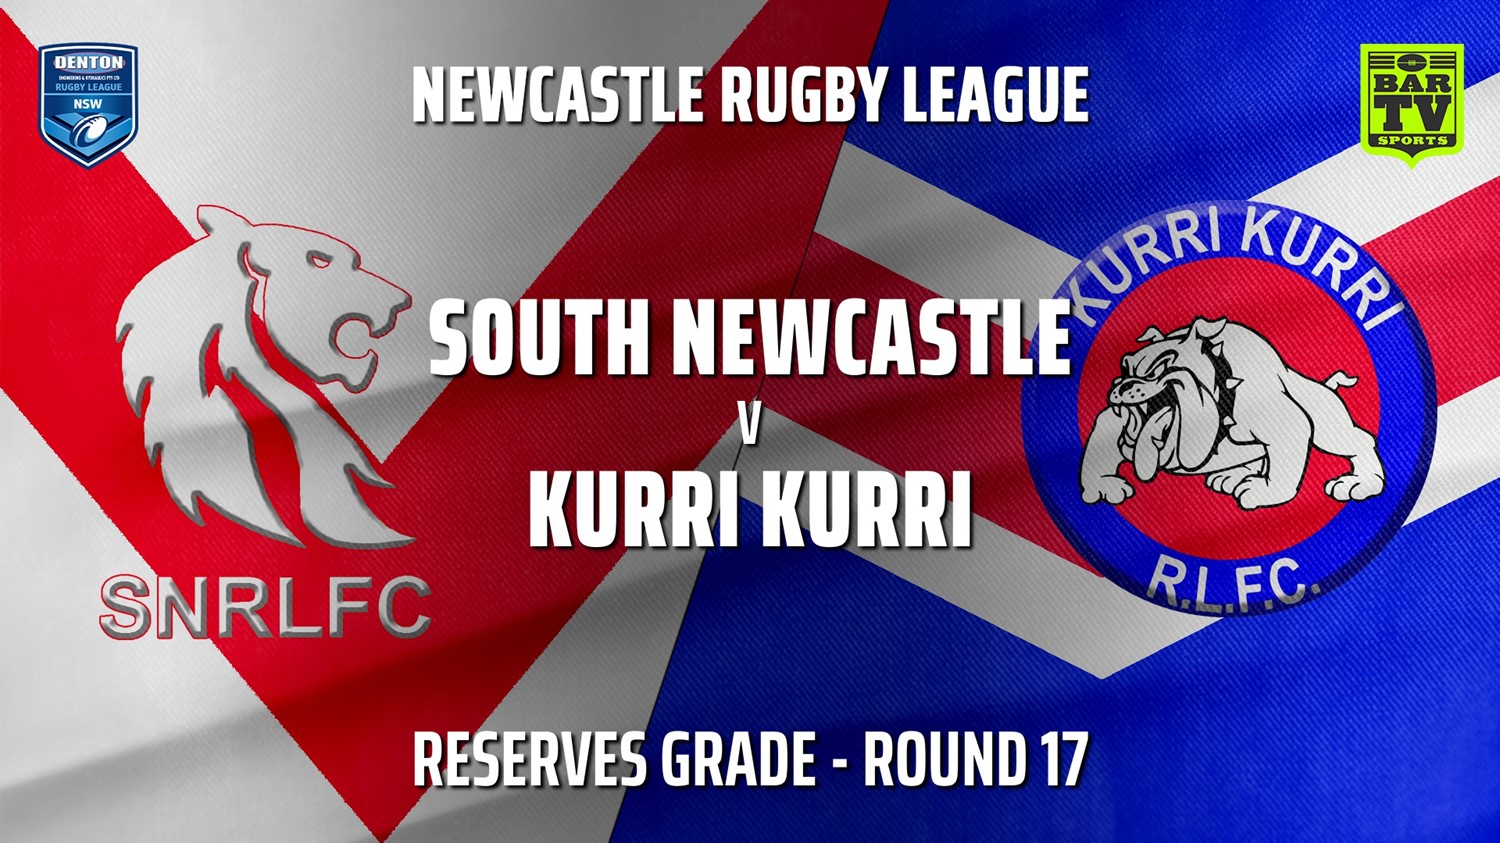 210801-Newcastle Round 17 - Reserves Grade - South Newcastle v Kurri Kurri Bulldogs Slate Image